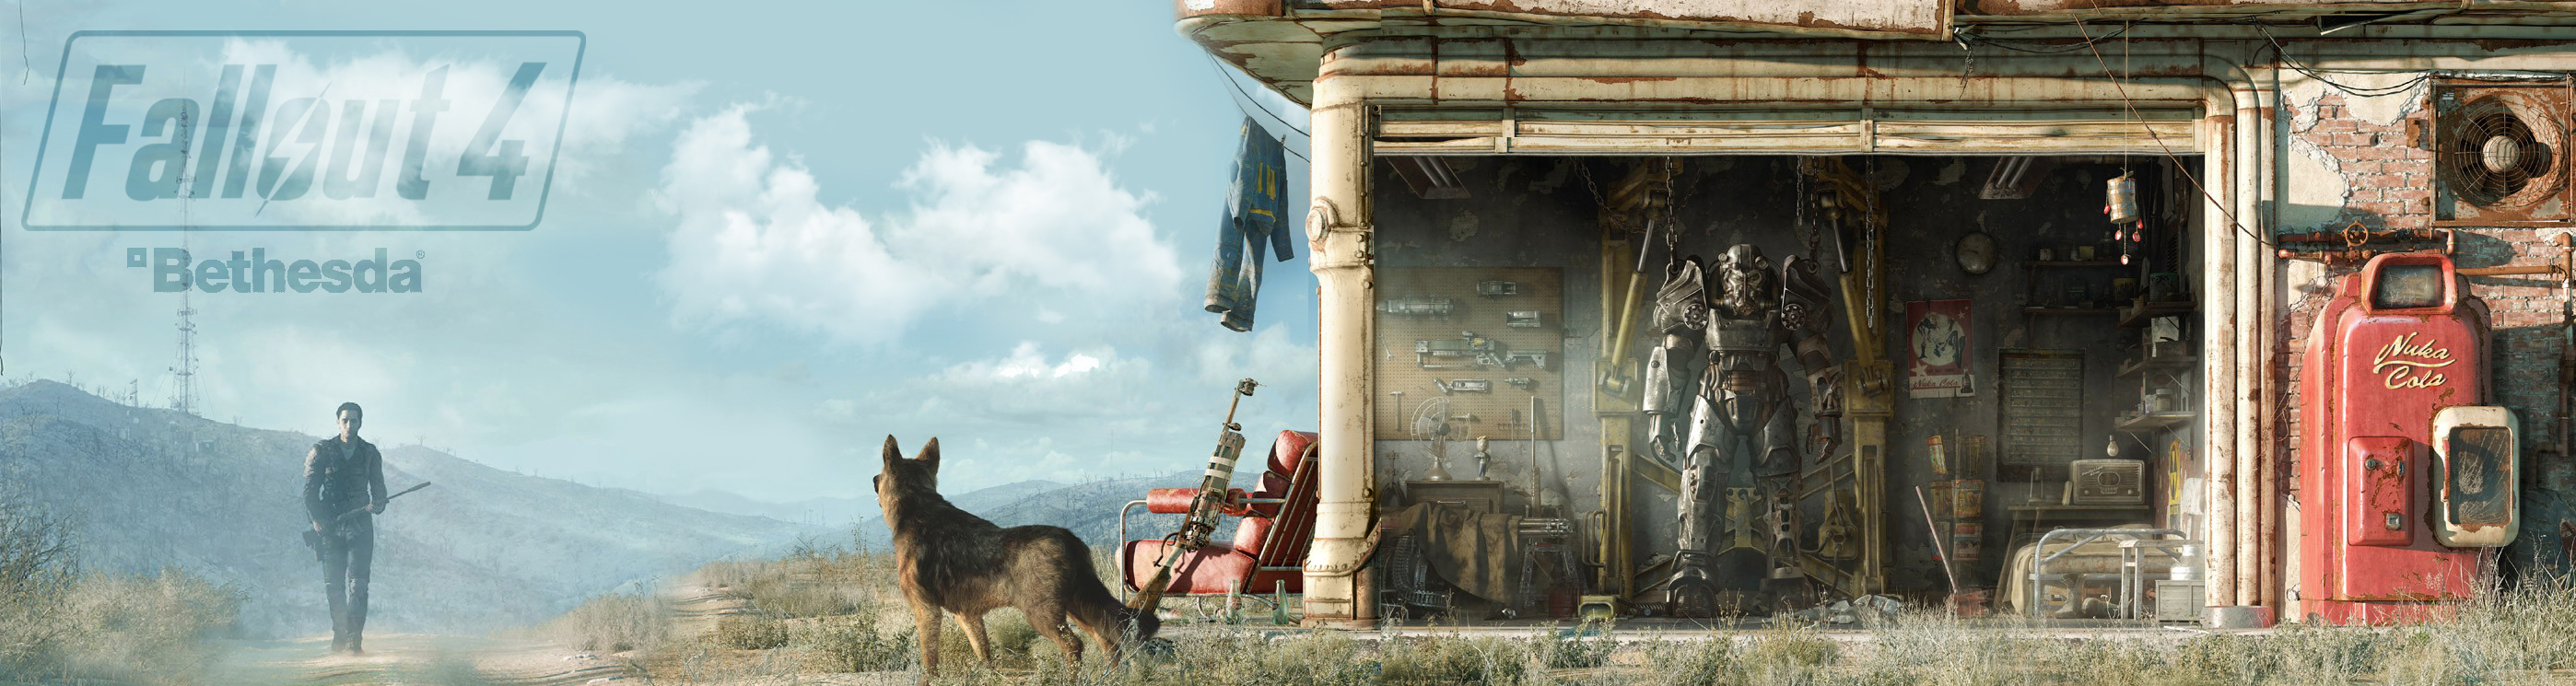 Fallout Garage Edition Poster By Betka Watch Fan Art Wallpaper Games